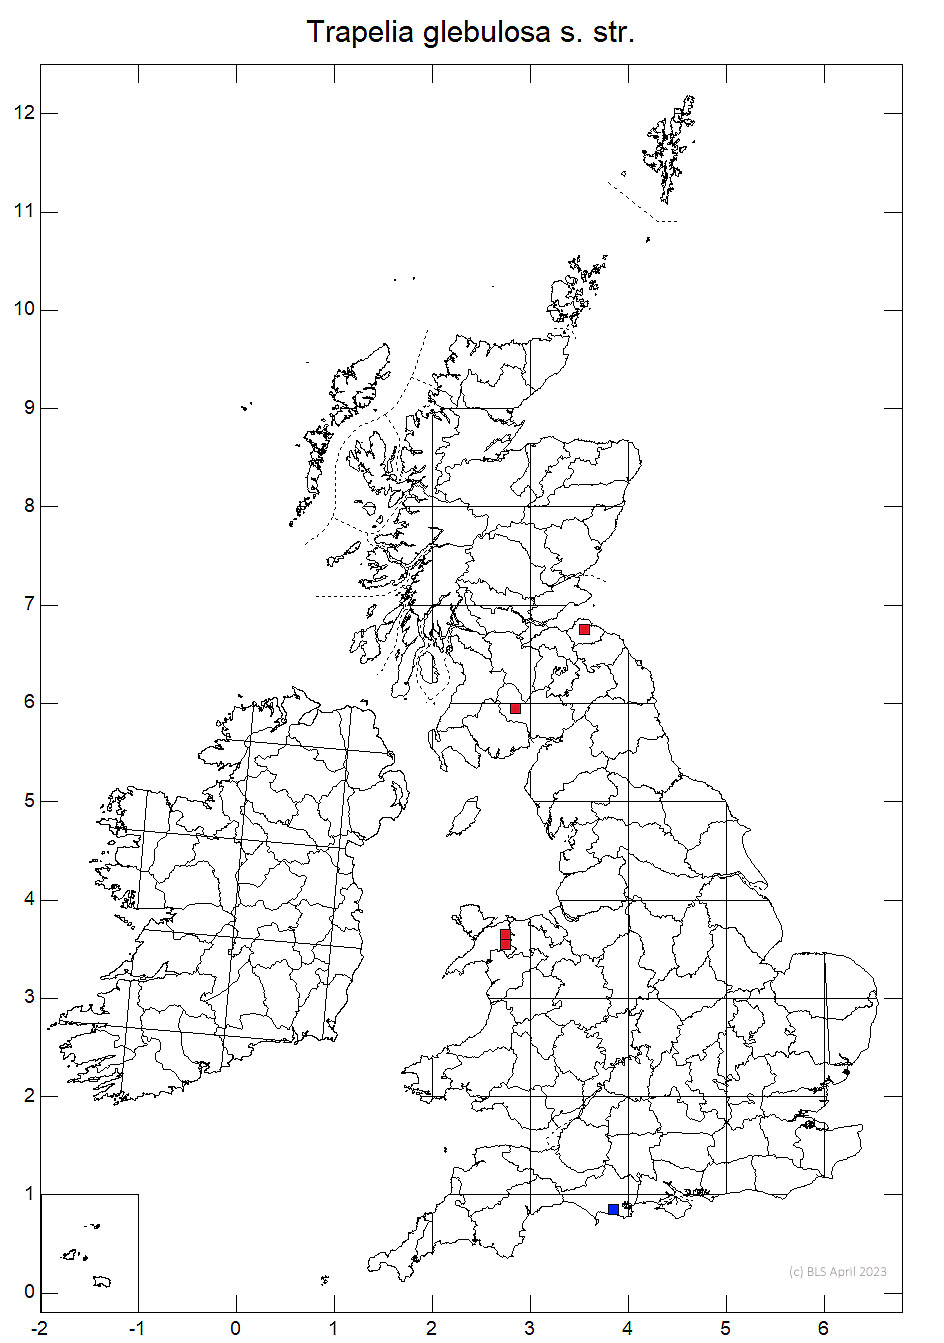 Trapelia glebulosa s. str. 10km sq distribution map